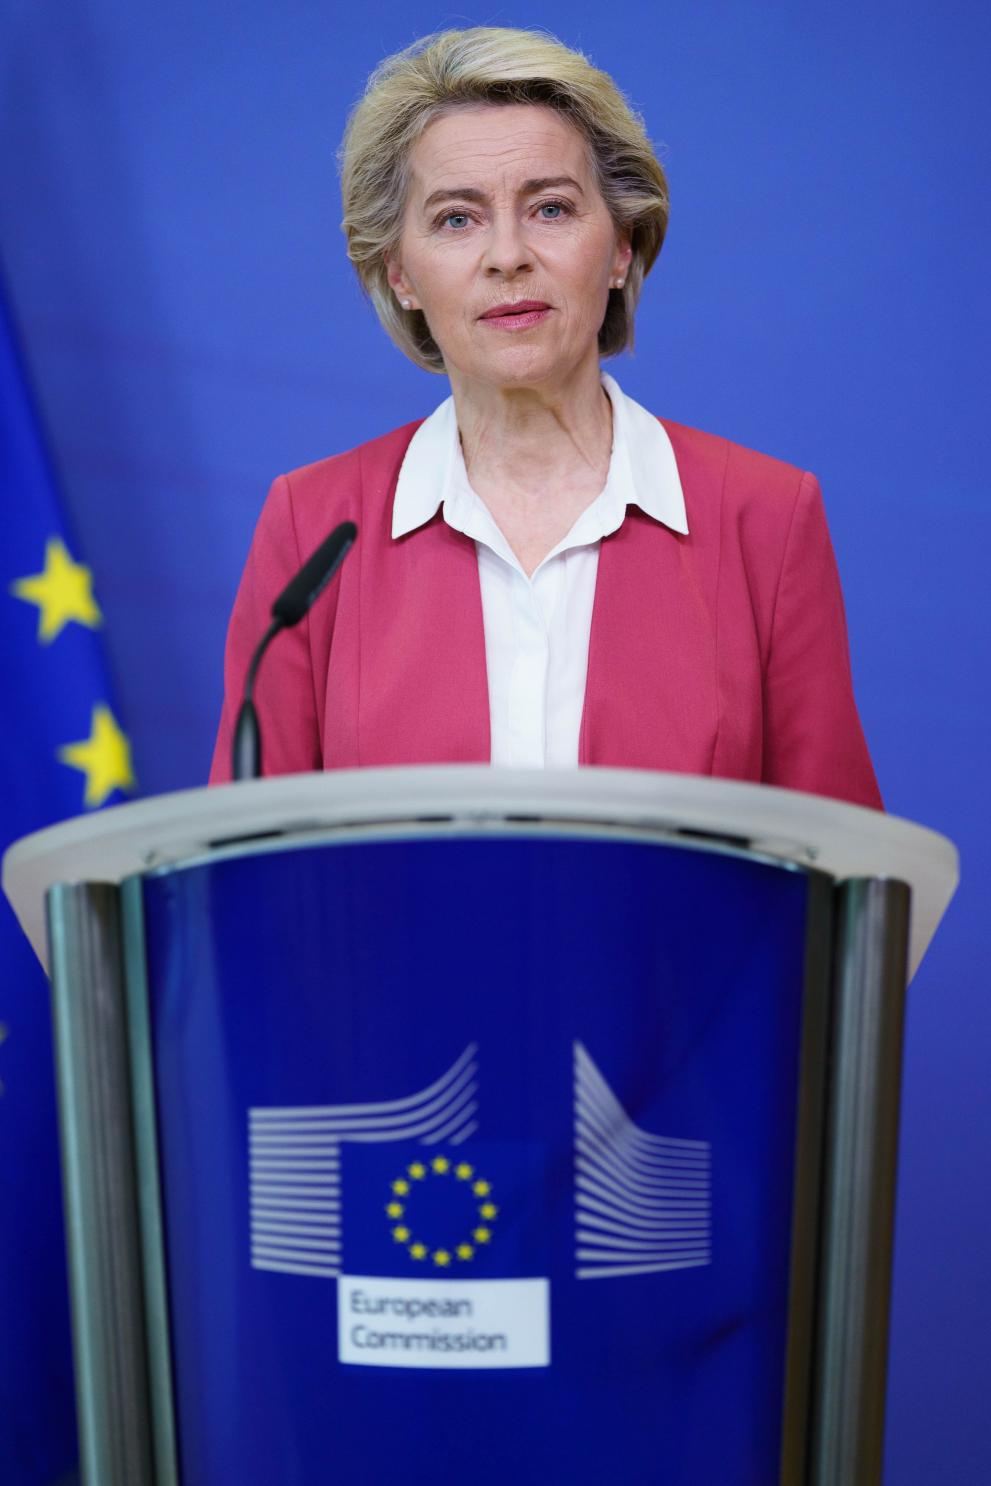 Statement by Ursula von der Leyen, President of the European Commission, on a new milestone in the European Union vaccines strategy